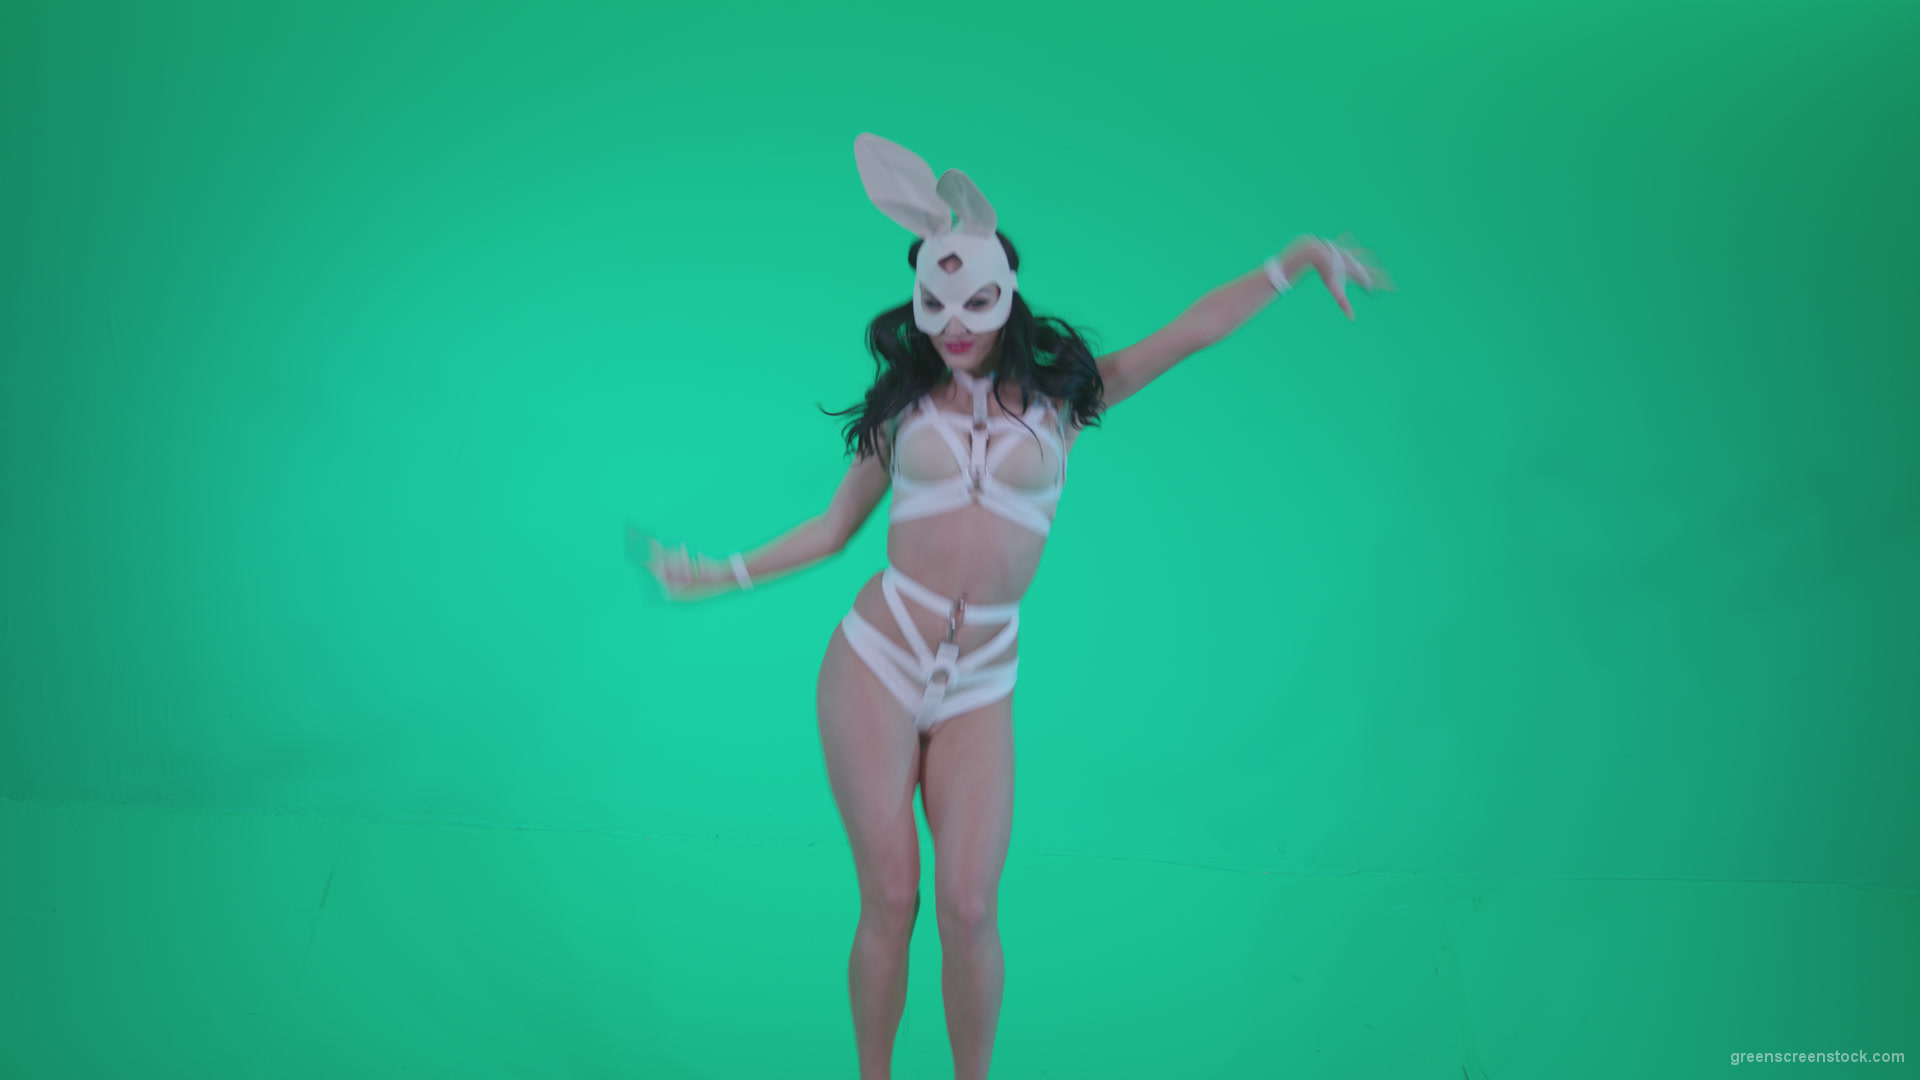 Go-go-Dancer-White-Rabbit-m9-Green-Screen-Video-Footage_009 Green Screen Stock